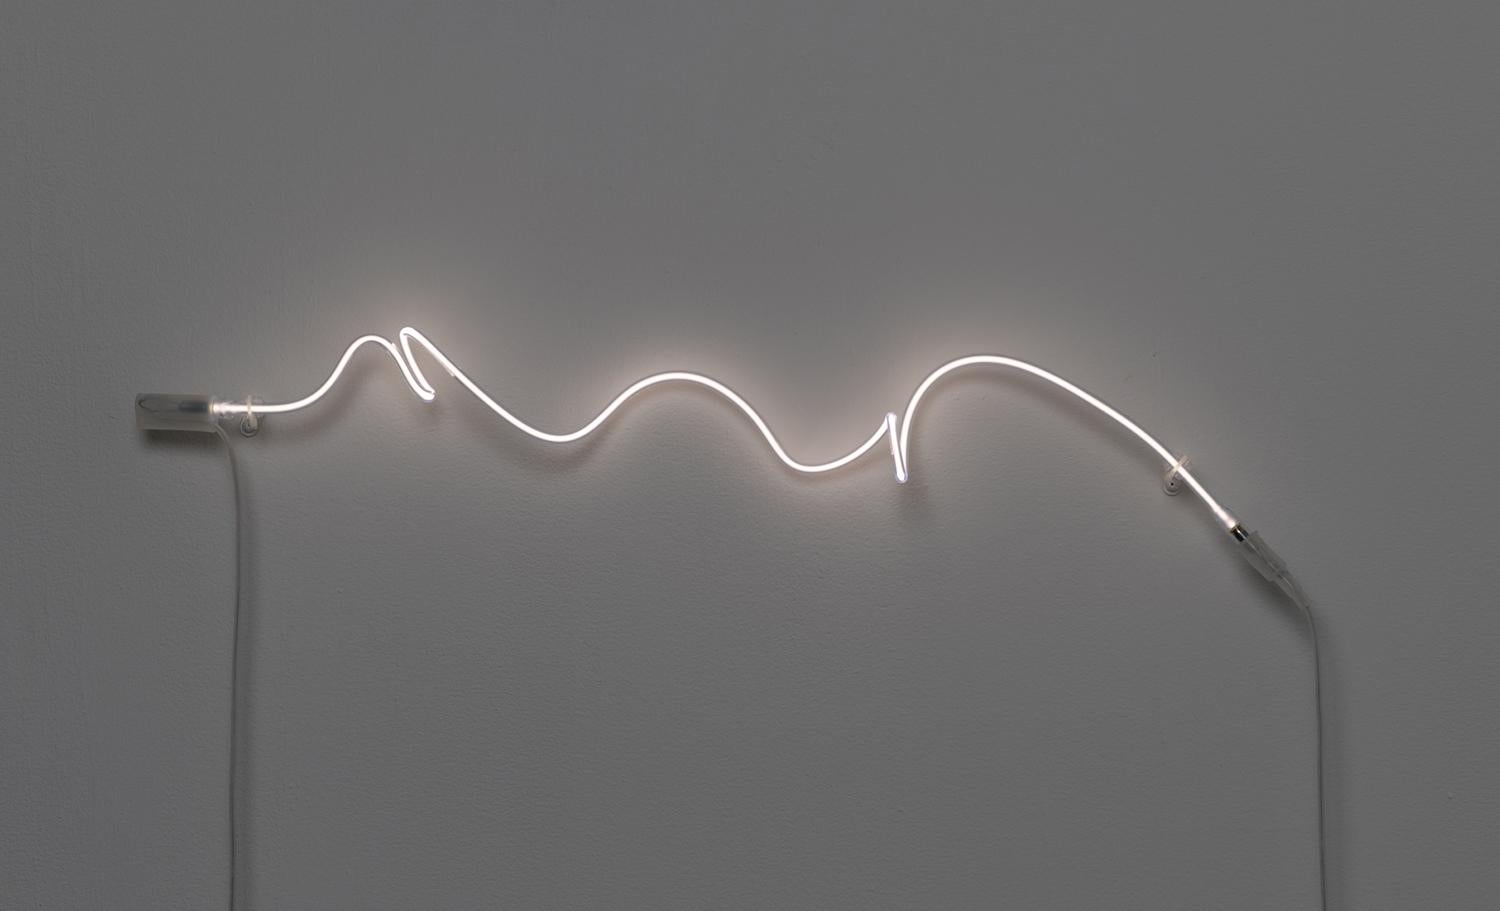 "Untitled" Neon light glass sculpture Minimalist Soft Cool White bright Curve